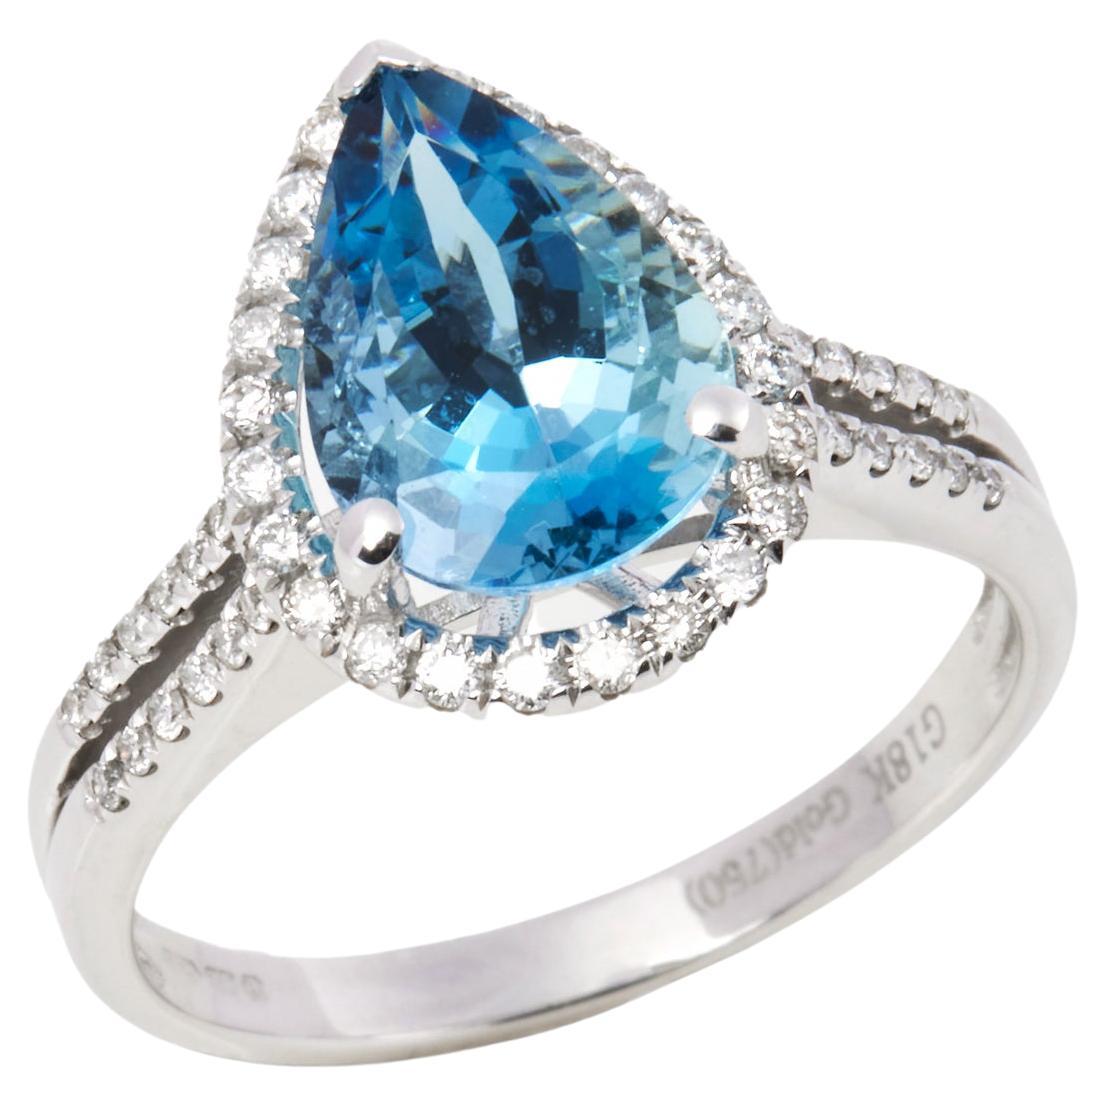 David Jerome Certified 2.52ct Pear Cut Aquamarine and Diamond Ring